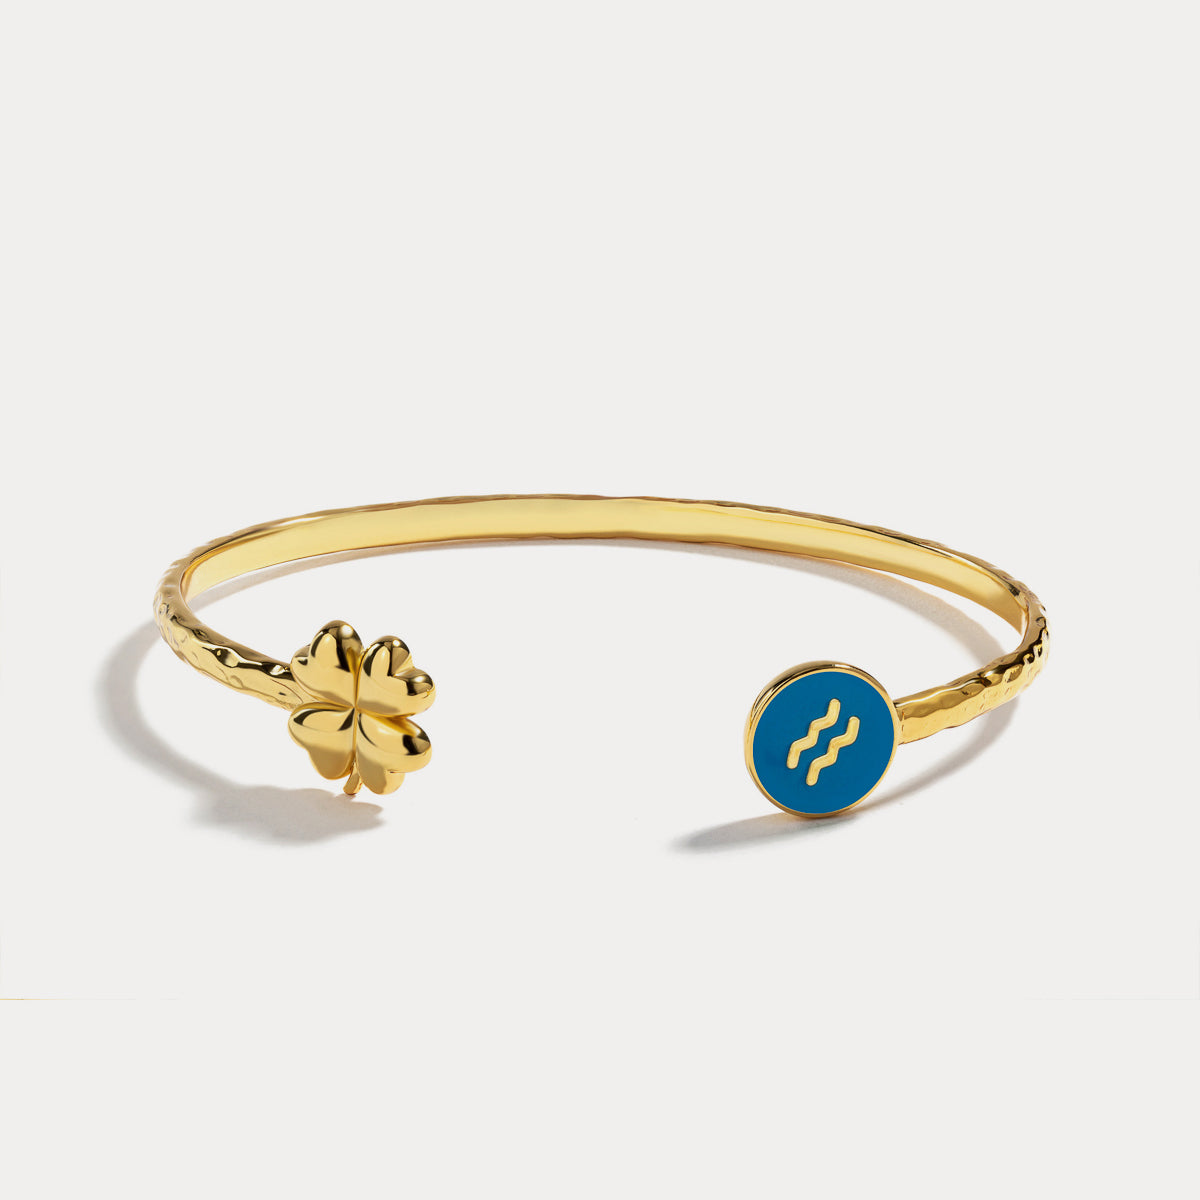 Aquarius astrological sign bracelet